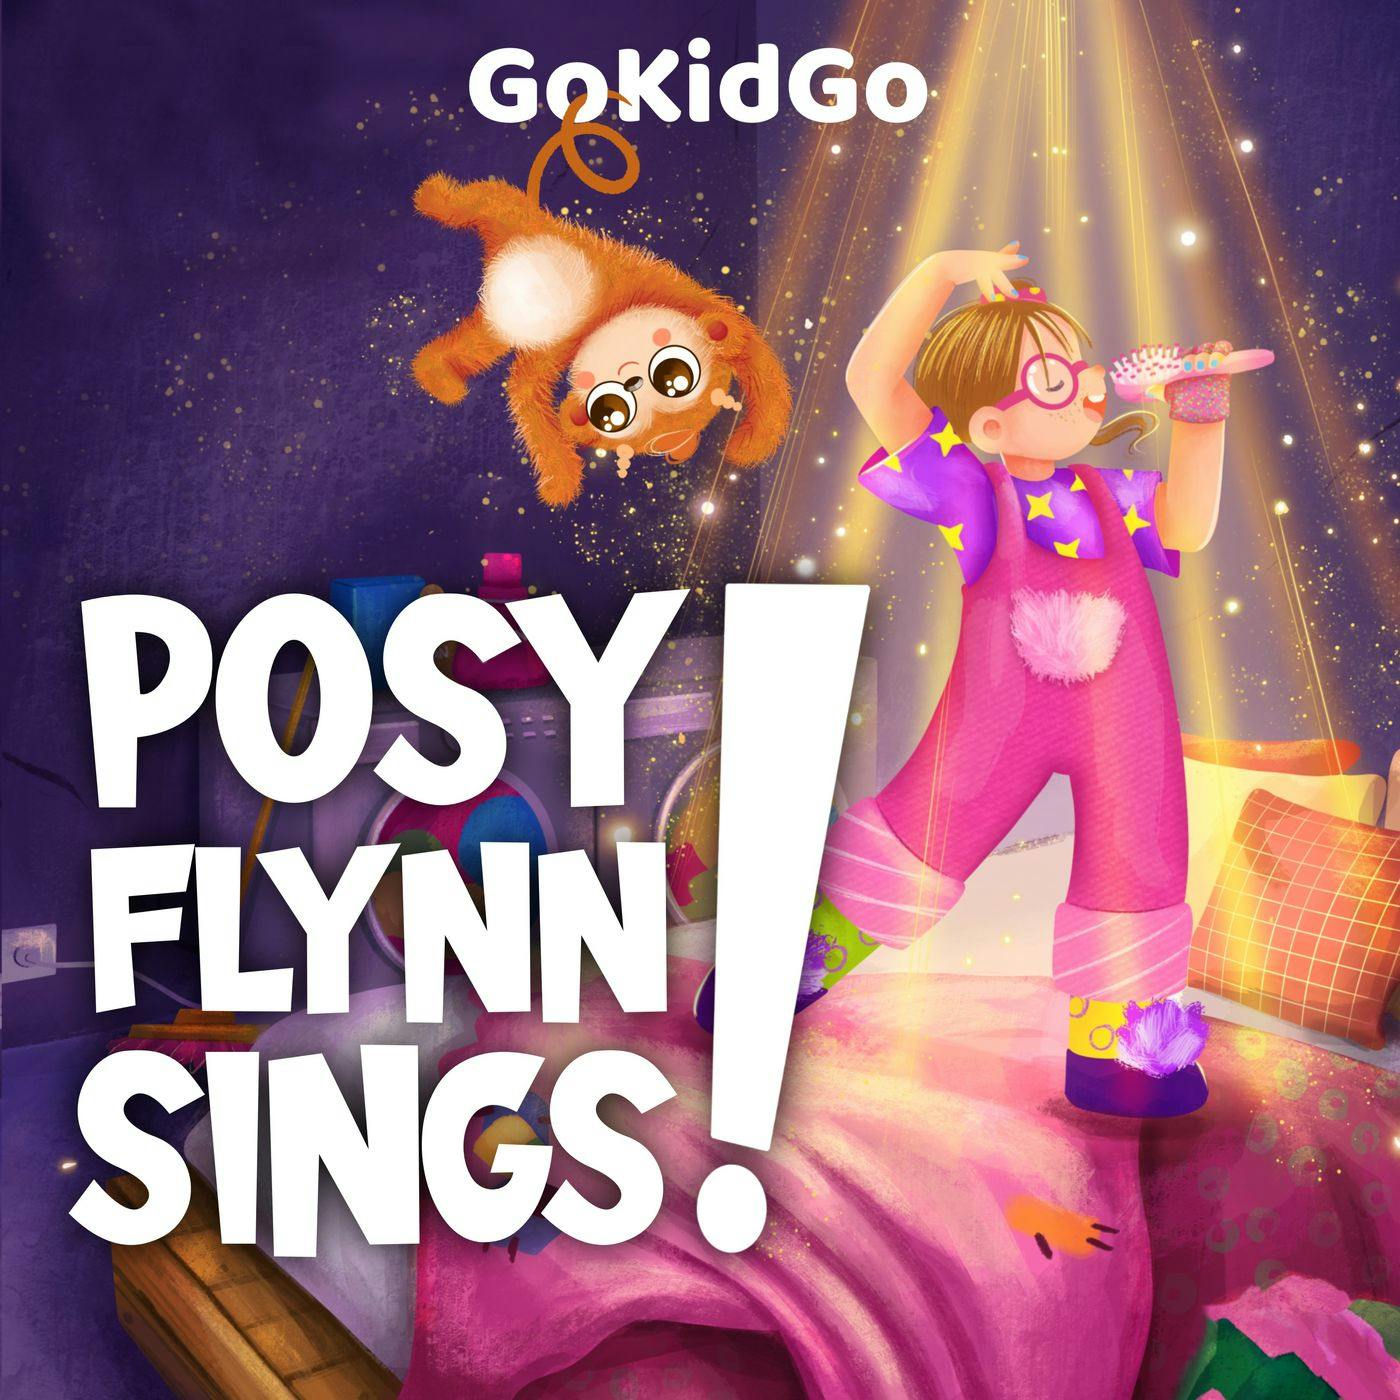 Posy Flynn Sings Trailer